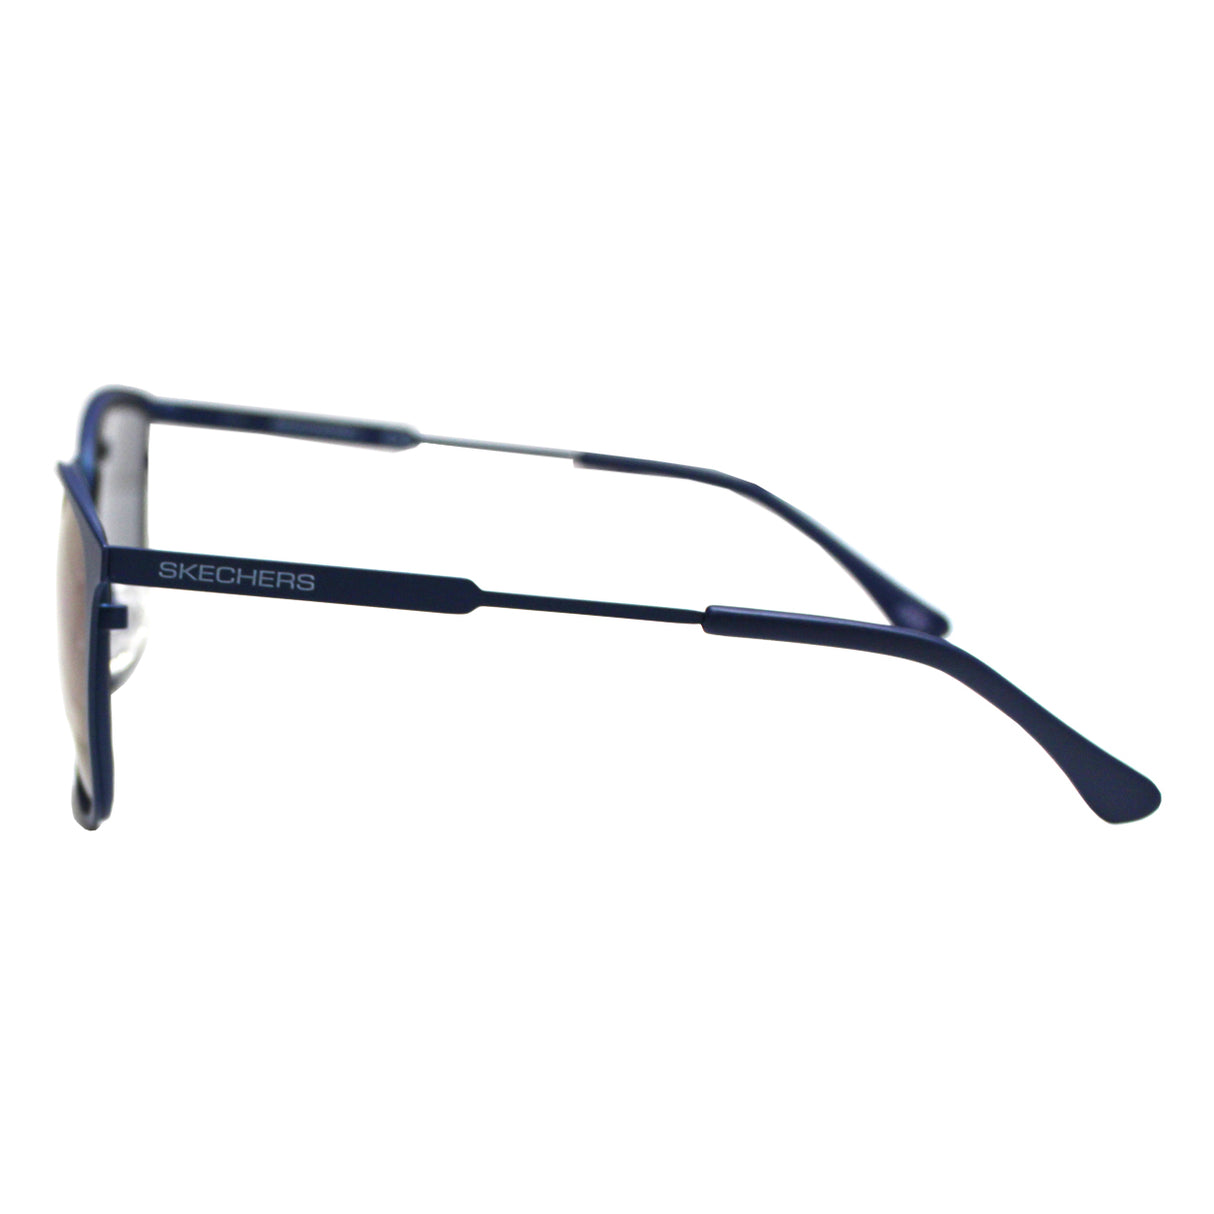 Skechers Golf 6050 Sport Sunglasses